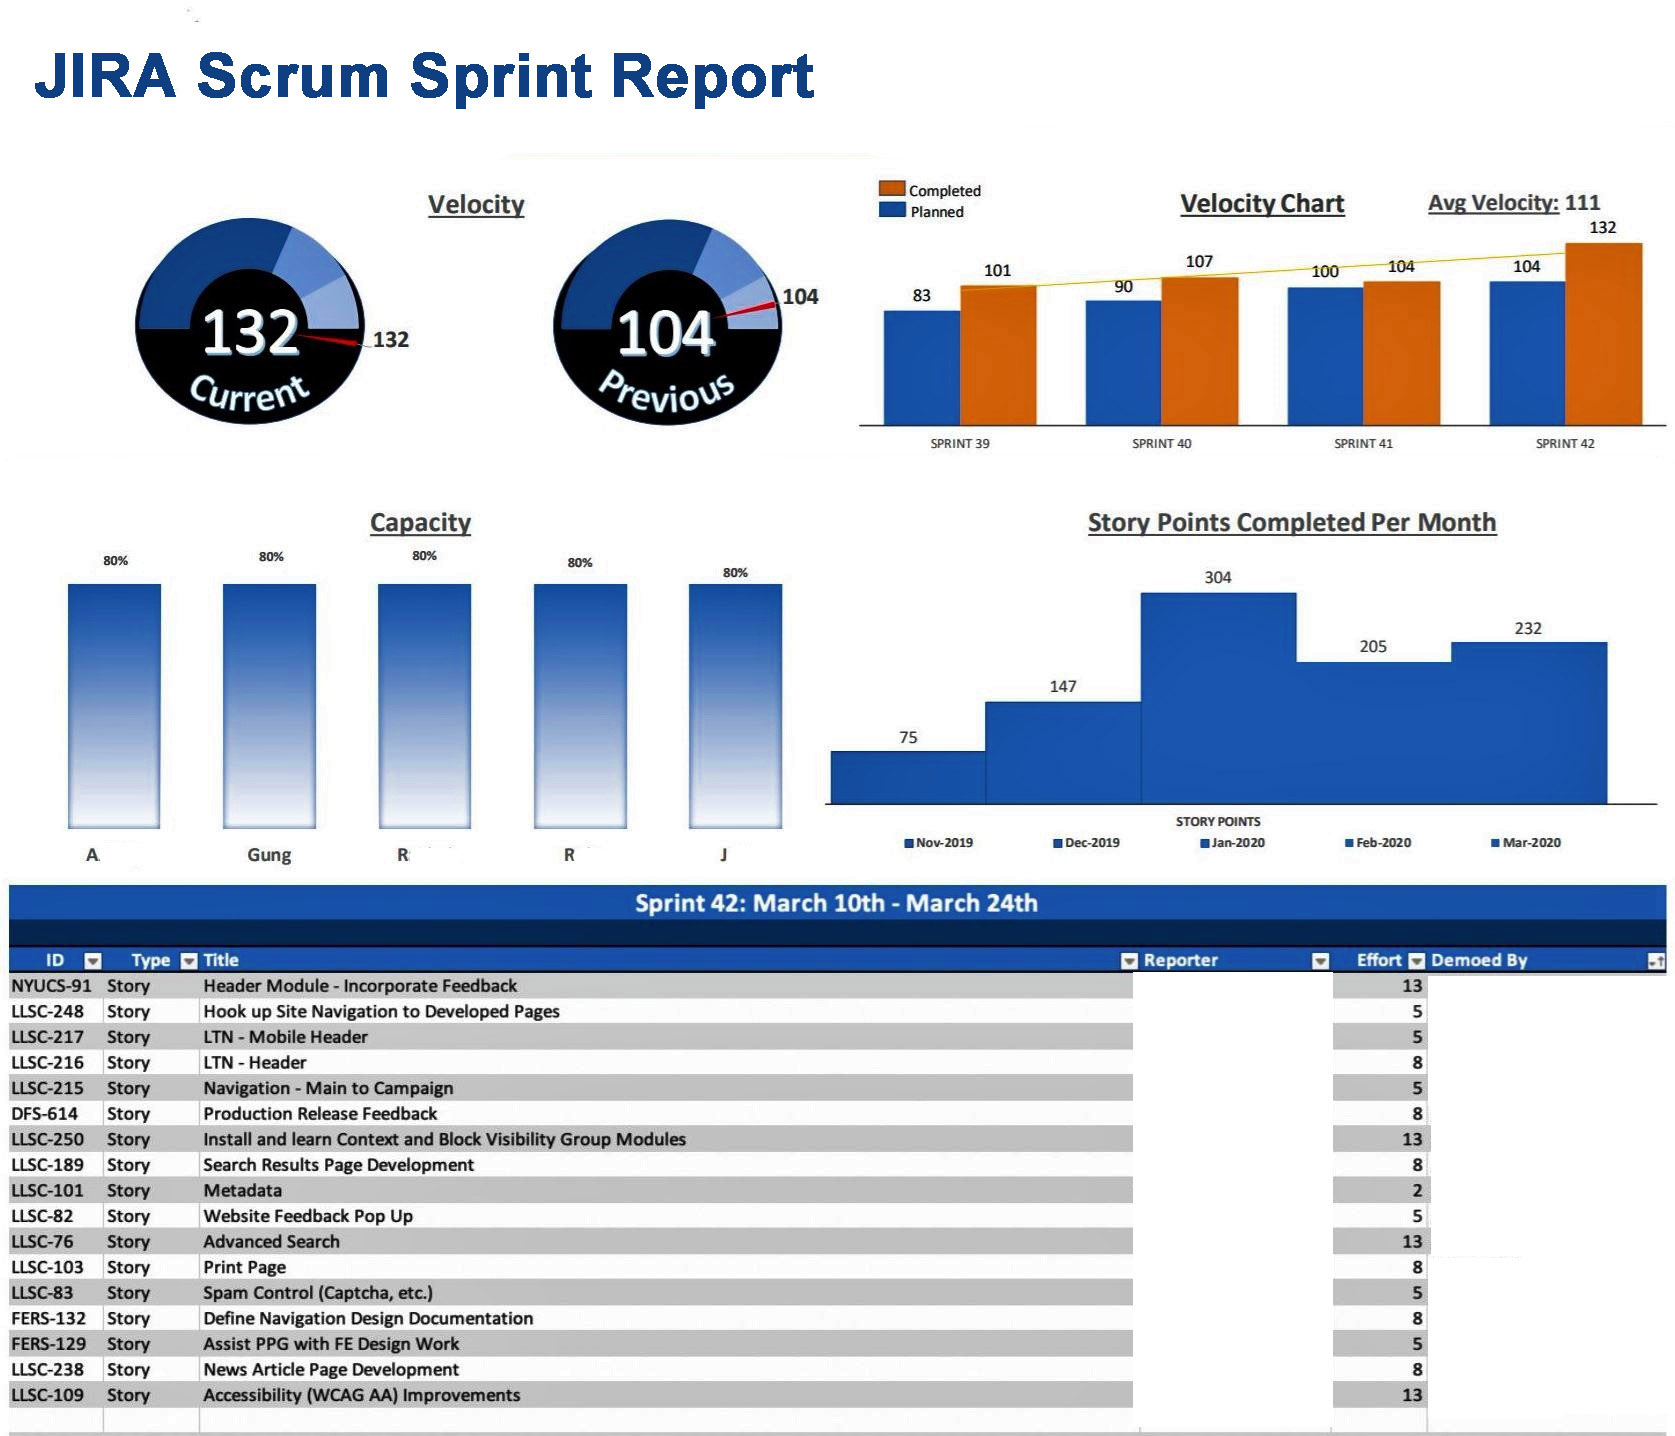 Sprint Report